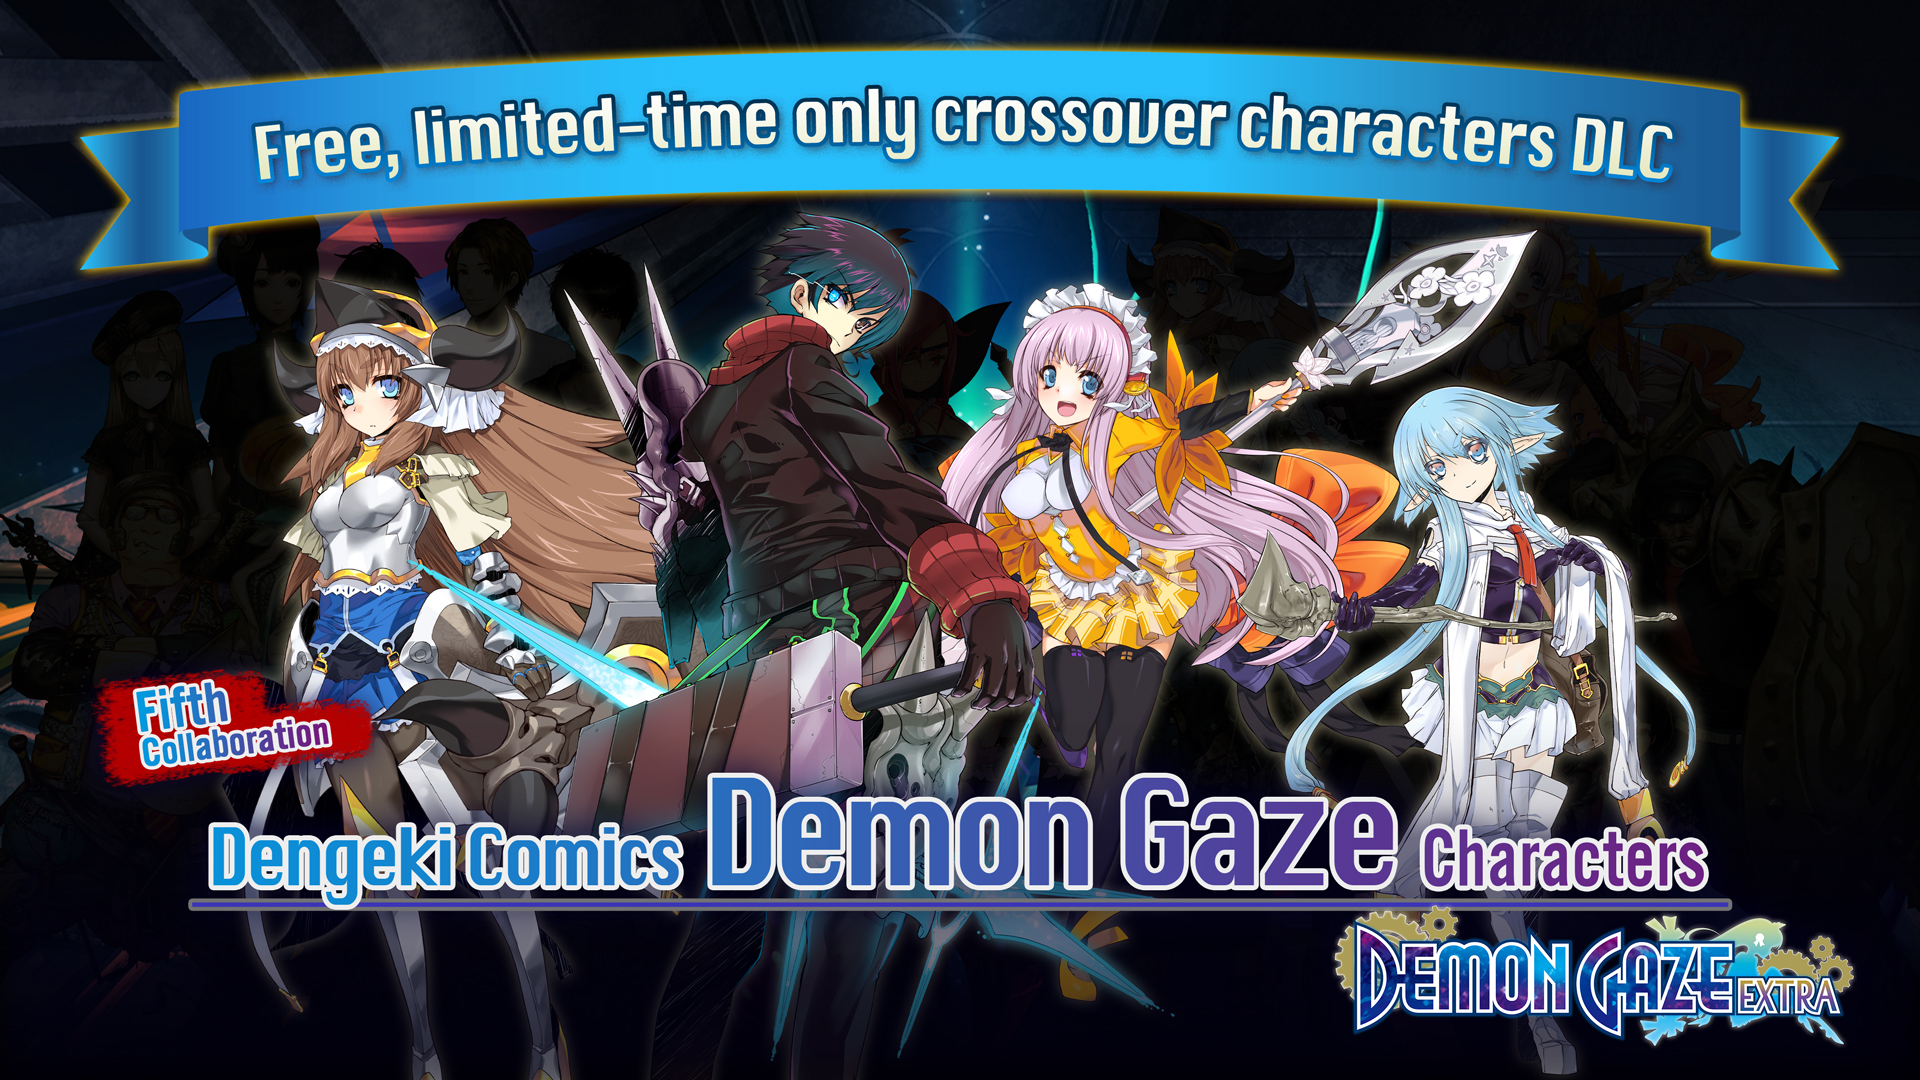 Fifth Collaboration: Dengeki Comics Demon Gaze Characters